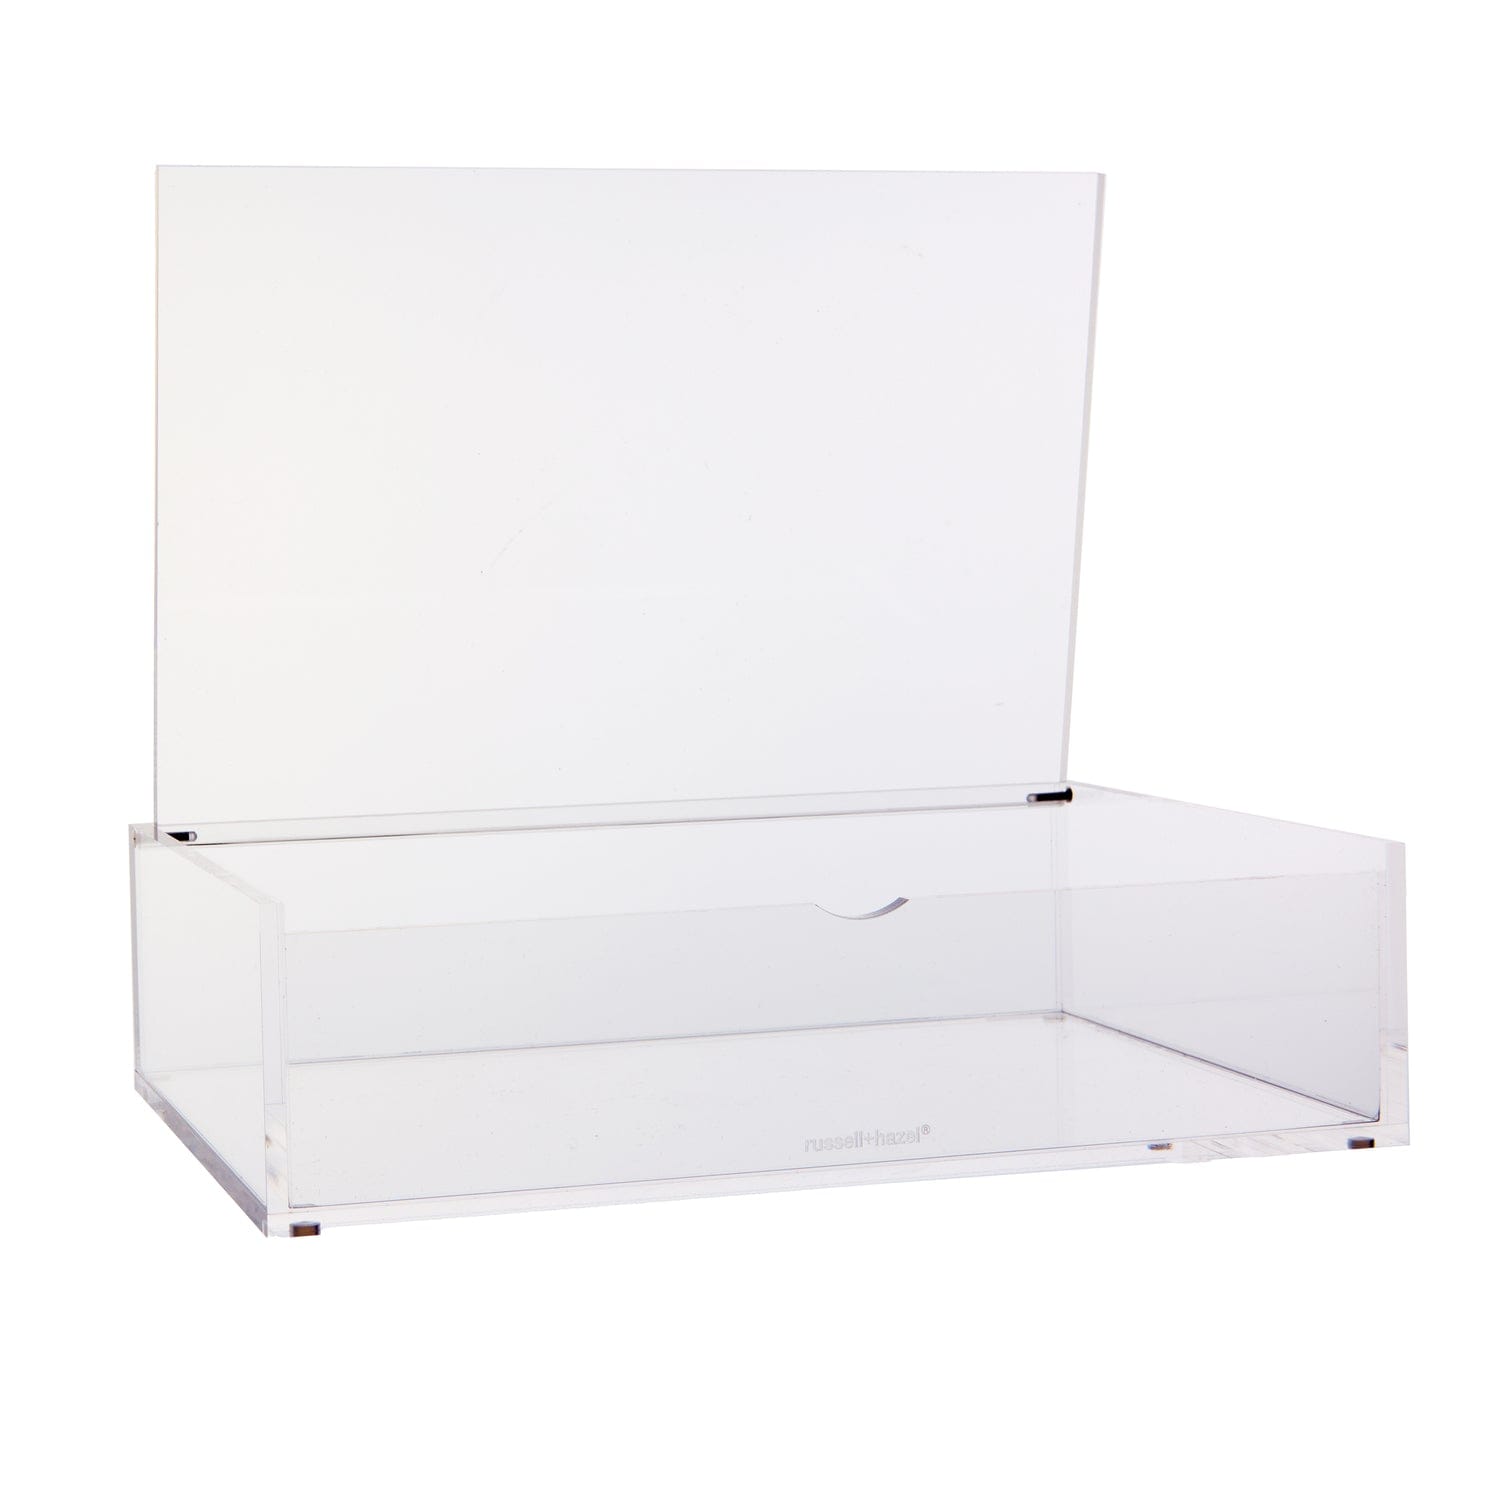 Acrylic Flip Box - Large russell+hazel Acrylic Organization